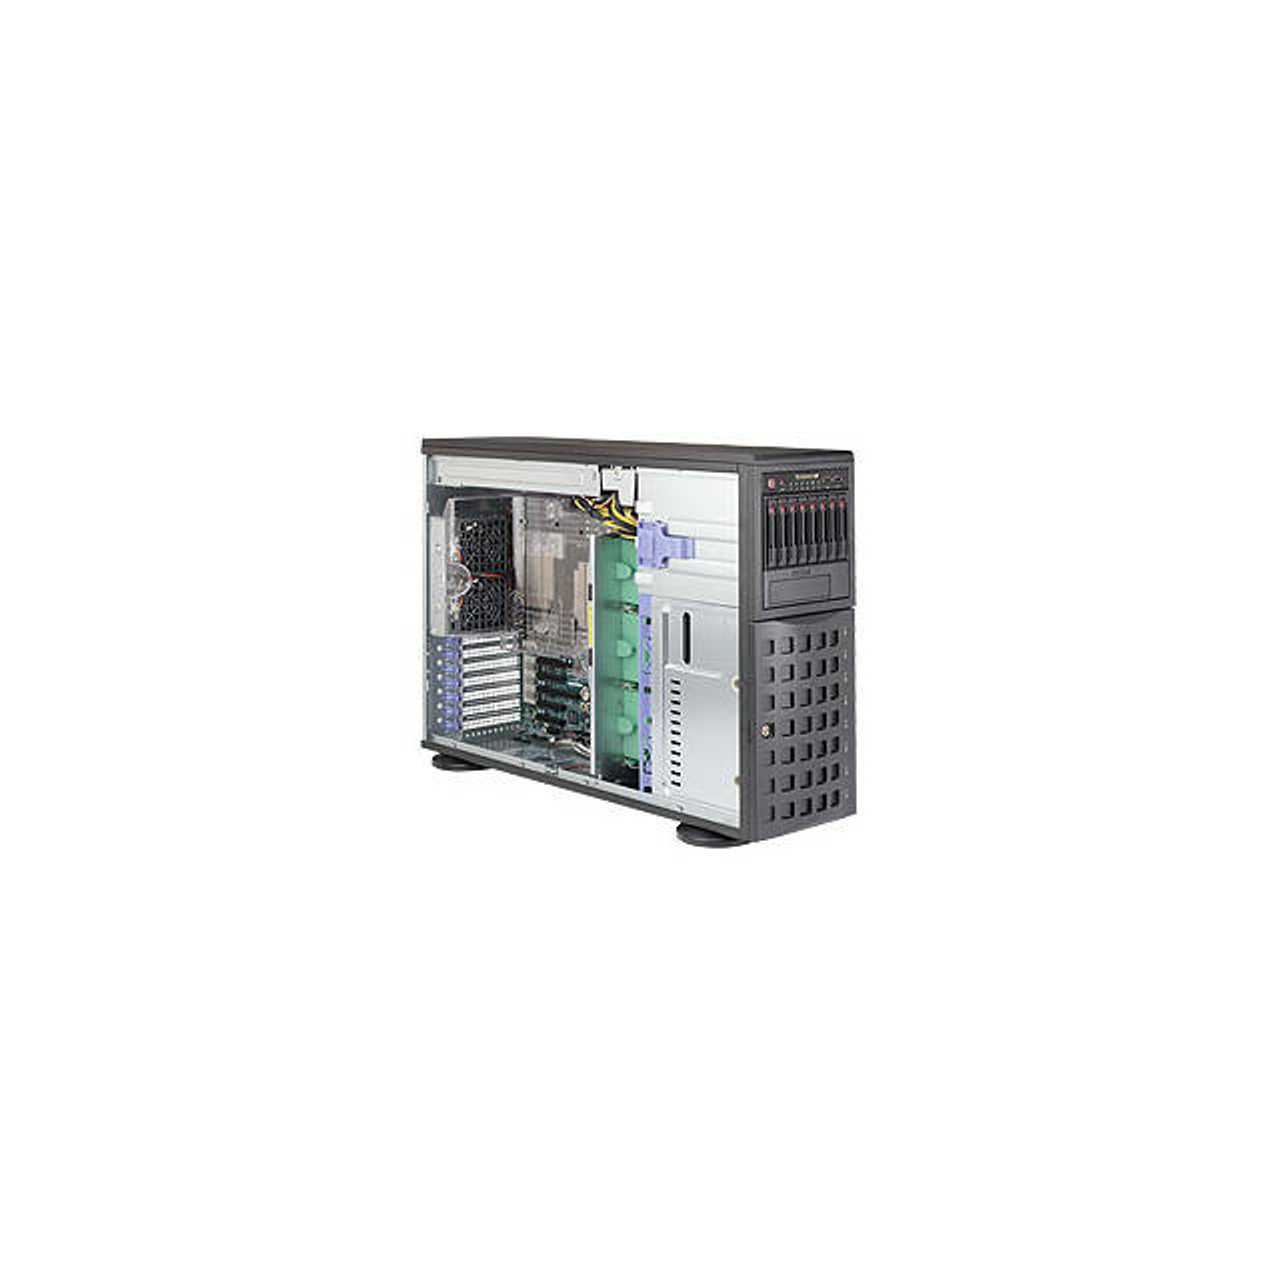 Supermicro SuperServer SYS-7048R-C1R4+ Dual LGA2011 920W 4U Rackmount/Tower Server Barebone System (Black)